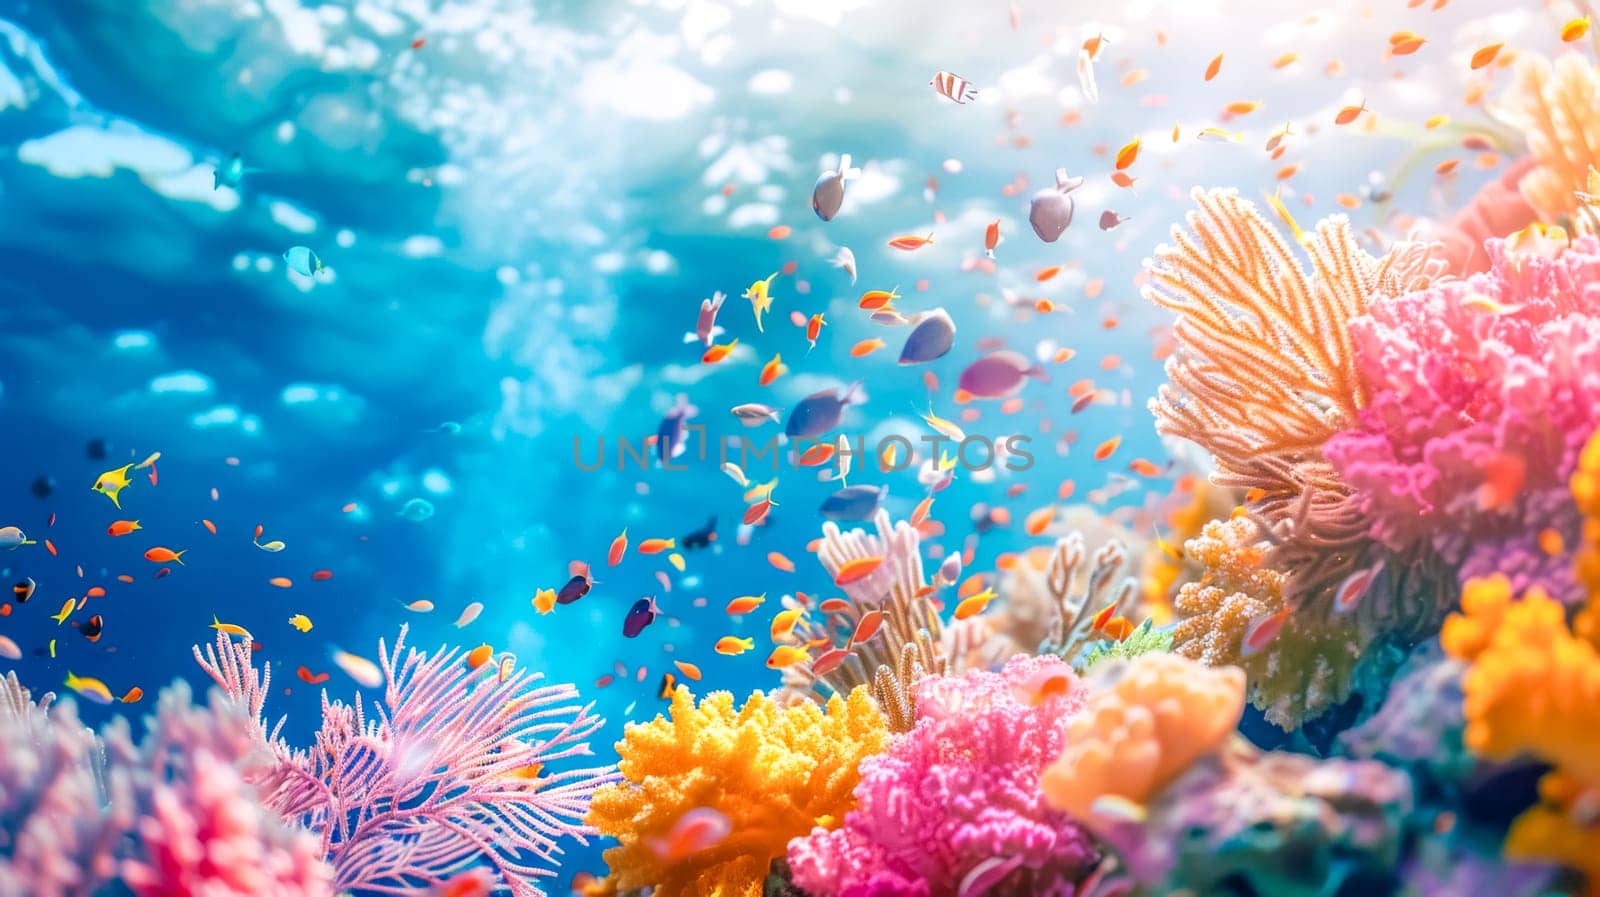 Vibrant underwater coral reef scene by Edophoto